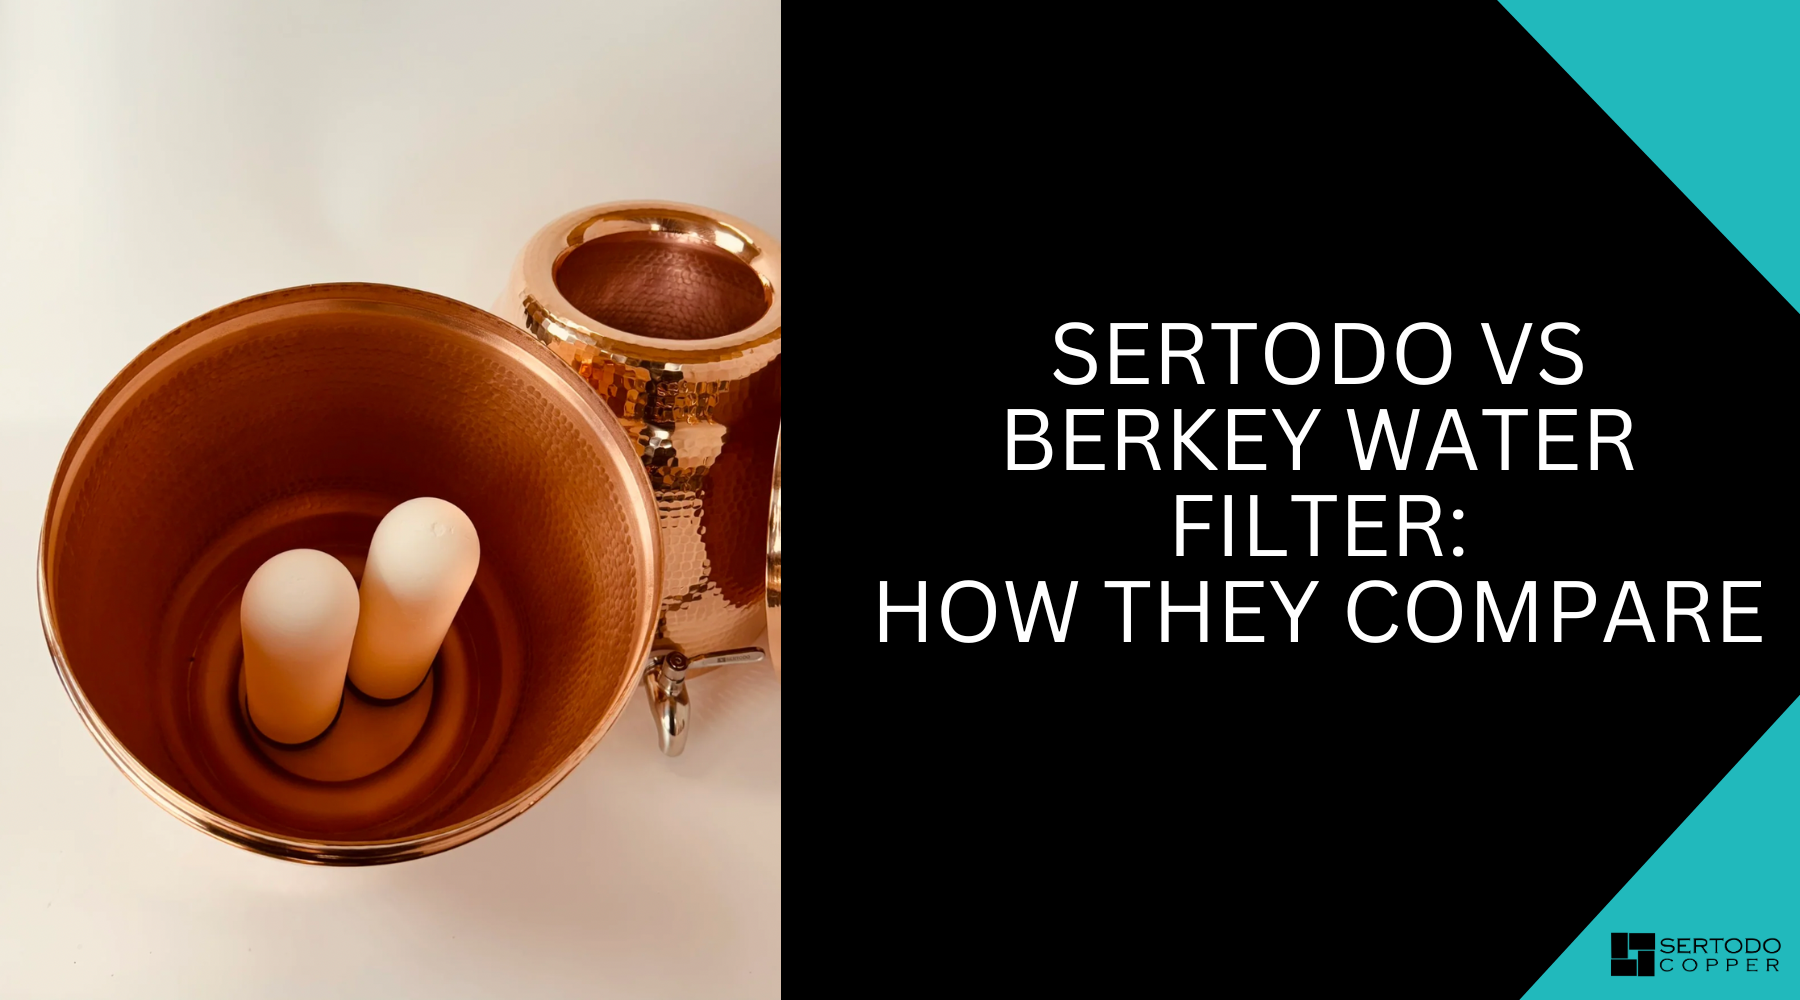 Sertodo vs Berky Water Filter How They Compare